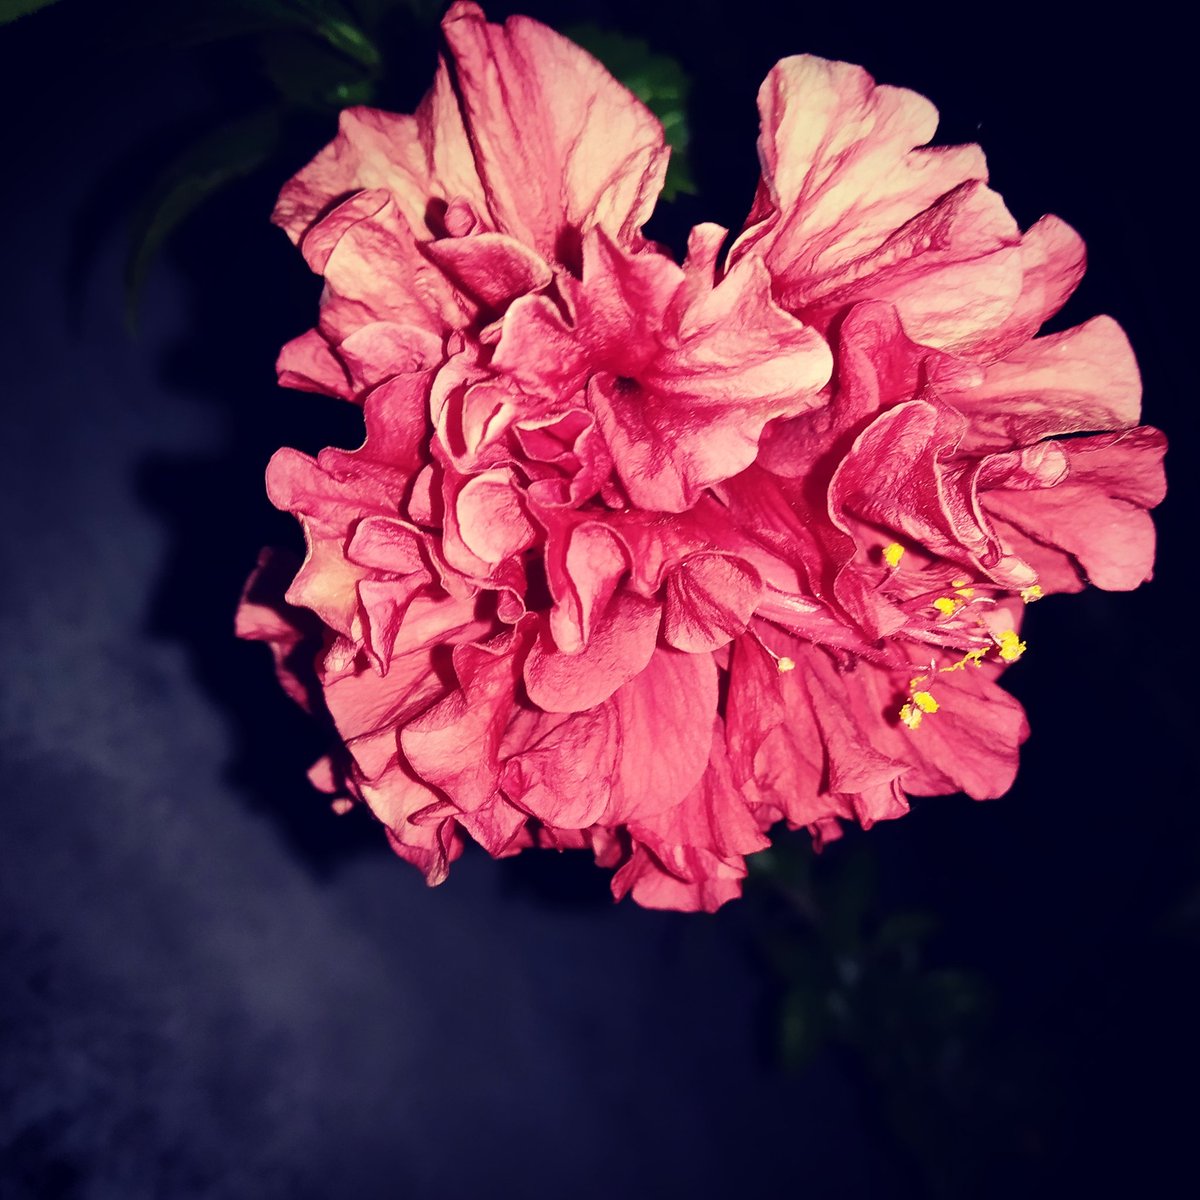 Mere ghar ke gudahal 🌺

#DoubleHibiscus #Hibiscus #IndianHibiscus #Gudahal
#flowers🌸 #flowers #flower
#naturelovers #naturephotography
#shotonsamsung #flowerlovers #instagram